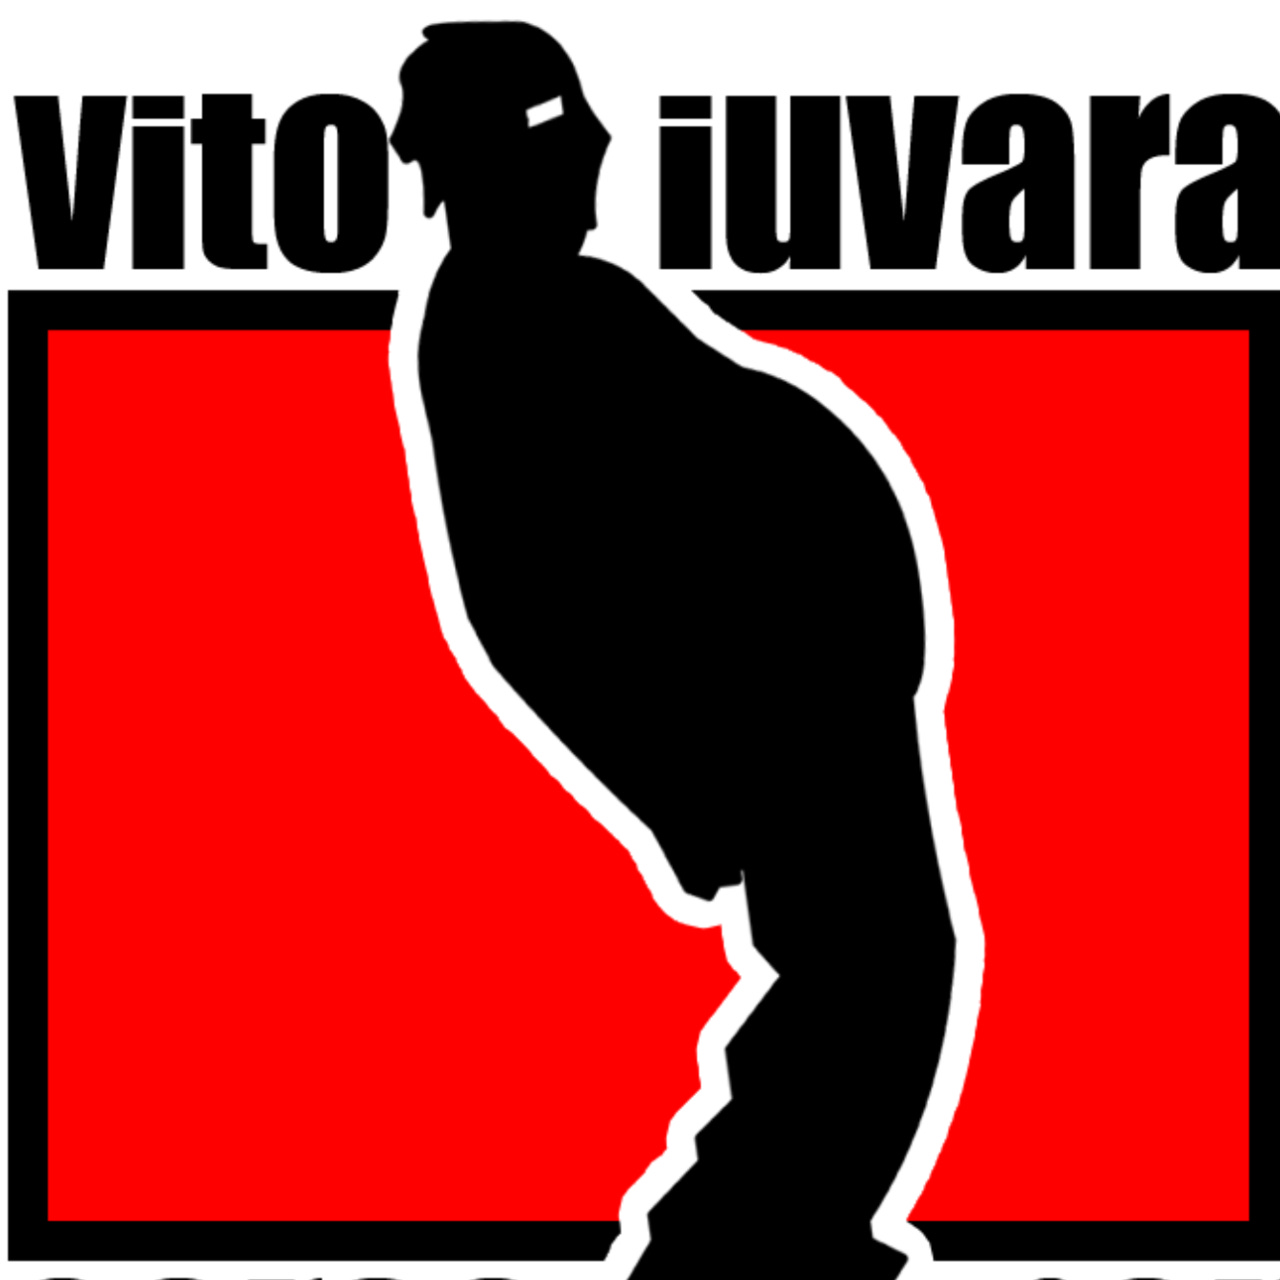 Vitoiuvara